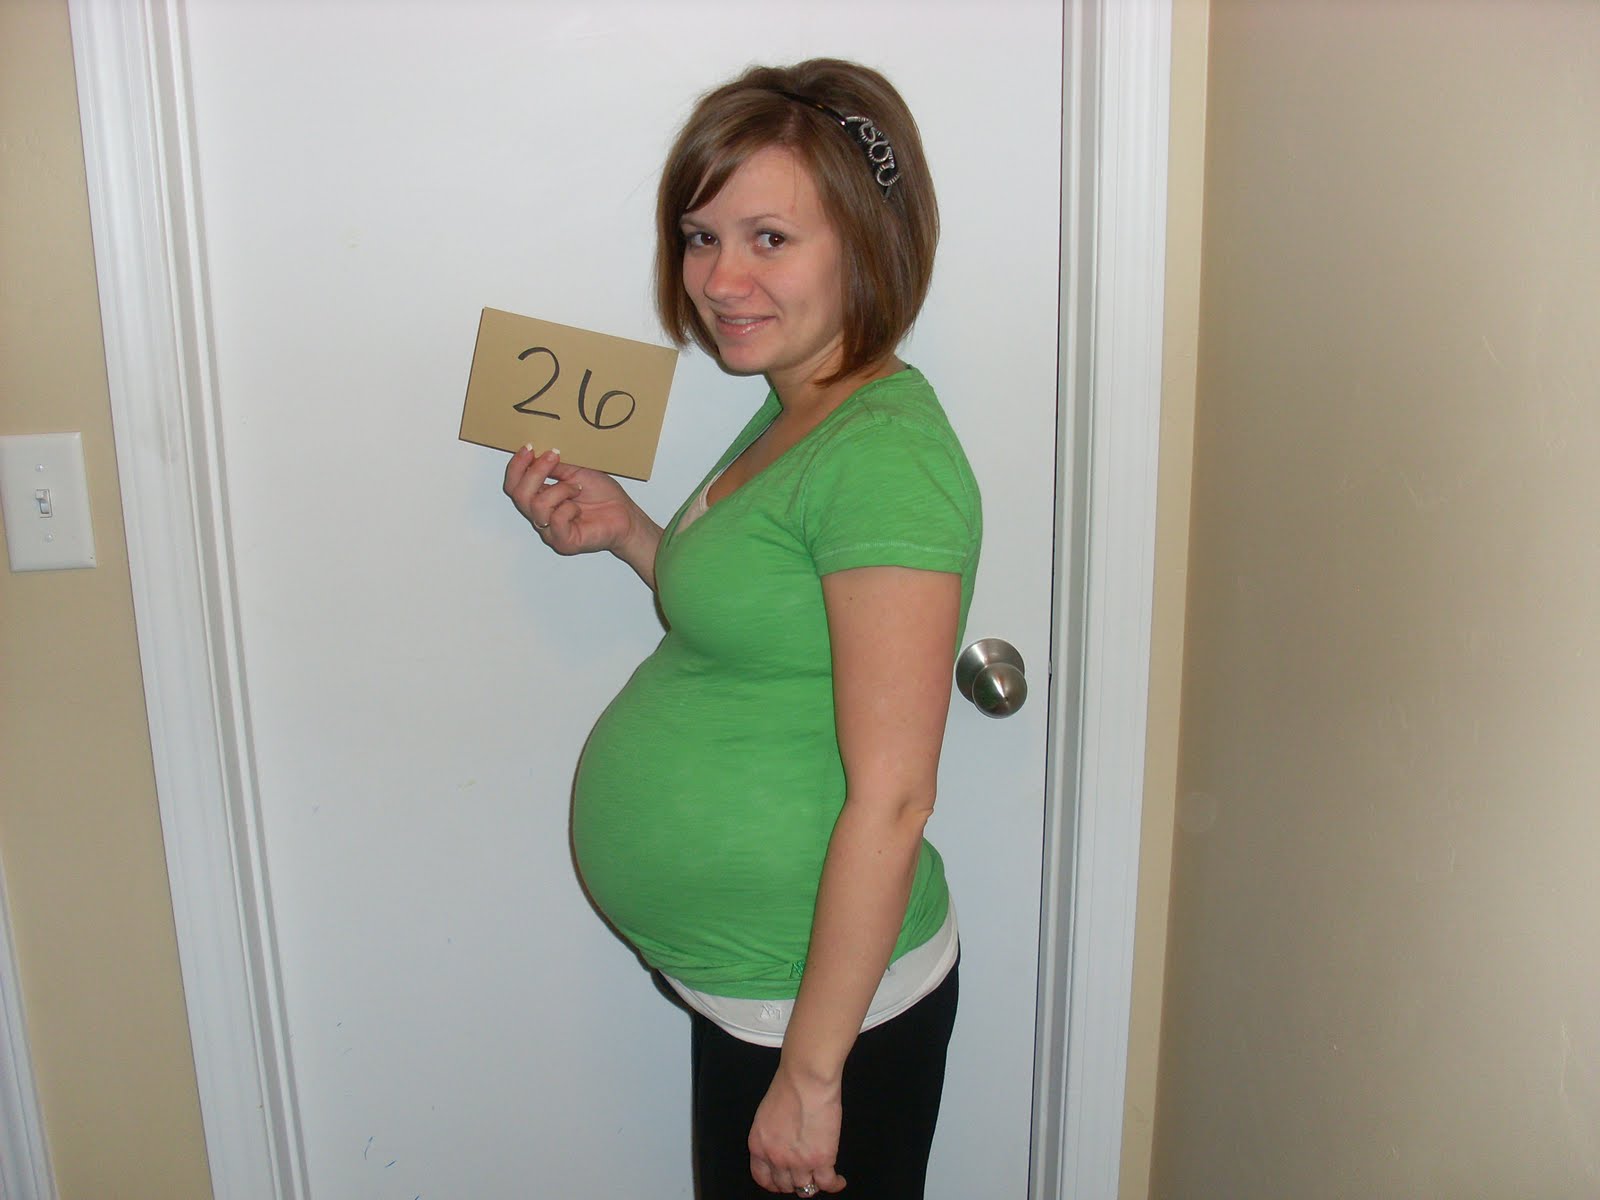 26 неделя беременности фото живота